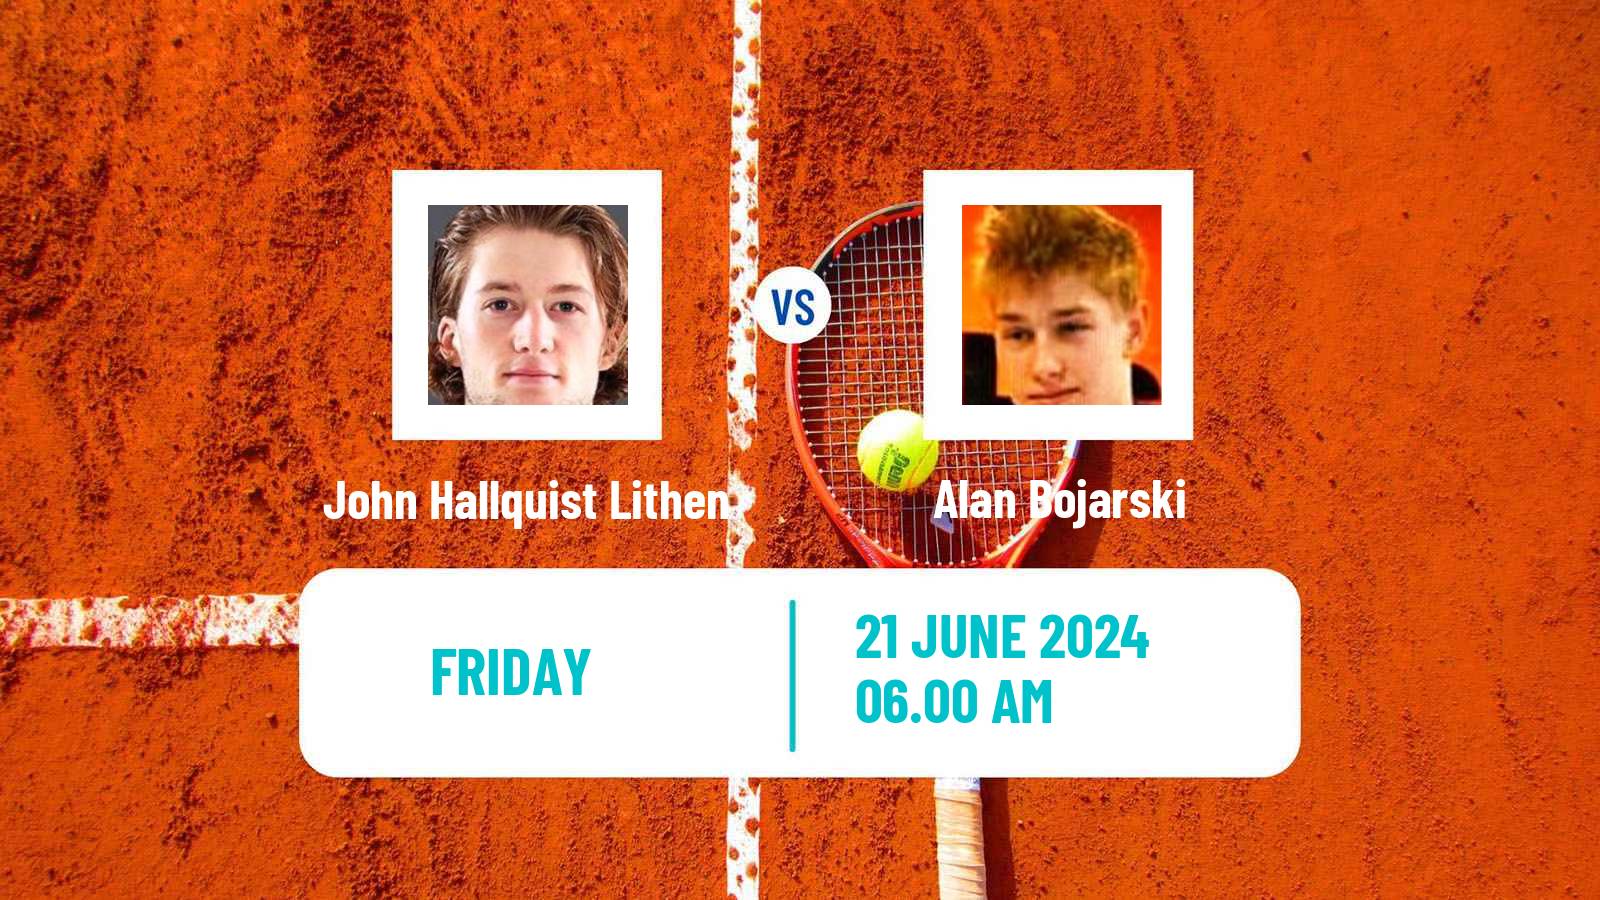 Tennis ITF M15 Koszalin 2 Men John Hallquist Lithen - Alan Bojarski